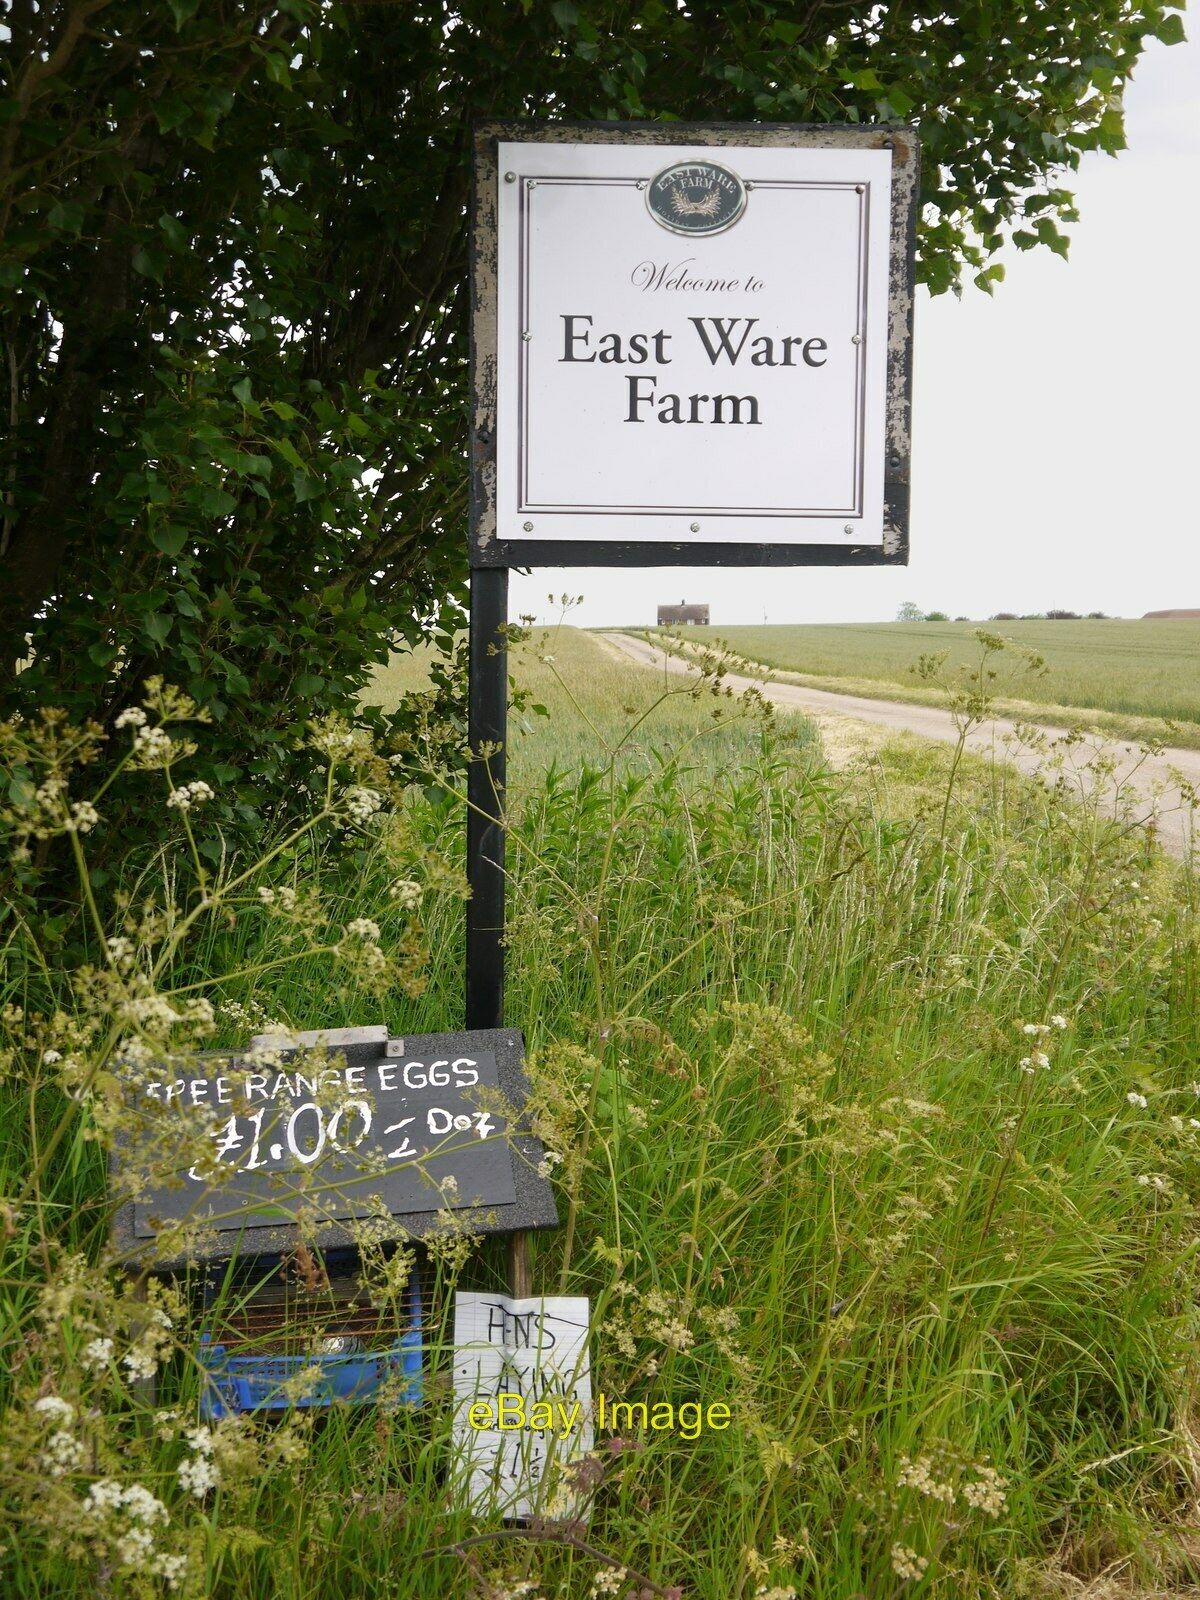 Photo 6x4 Free range eggs at farm entrance East Ware Farm Free range eggs c2016